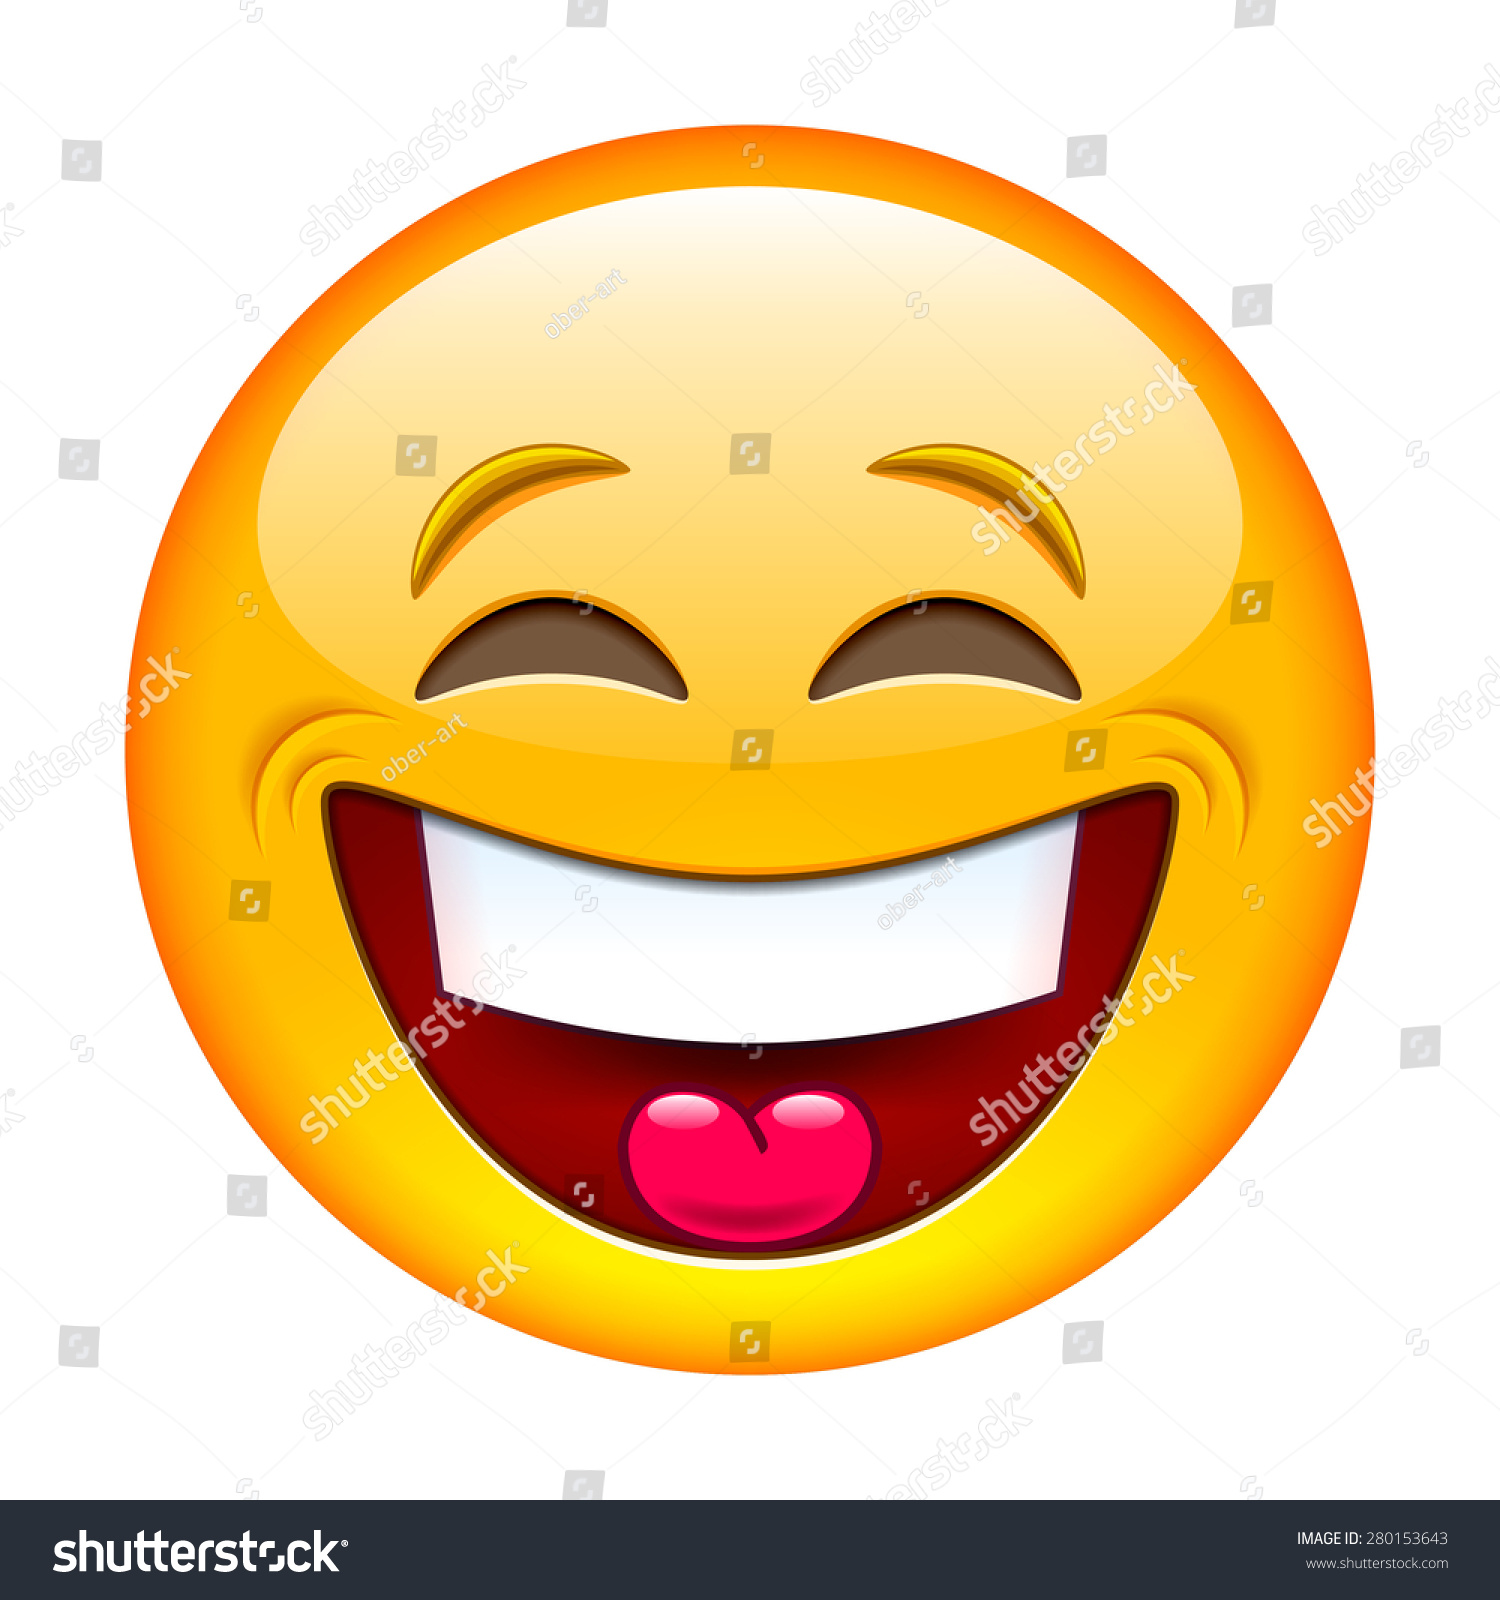 laughing emoji clipart - photo #19